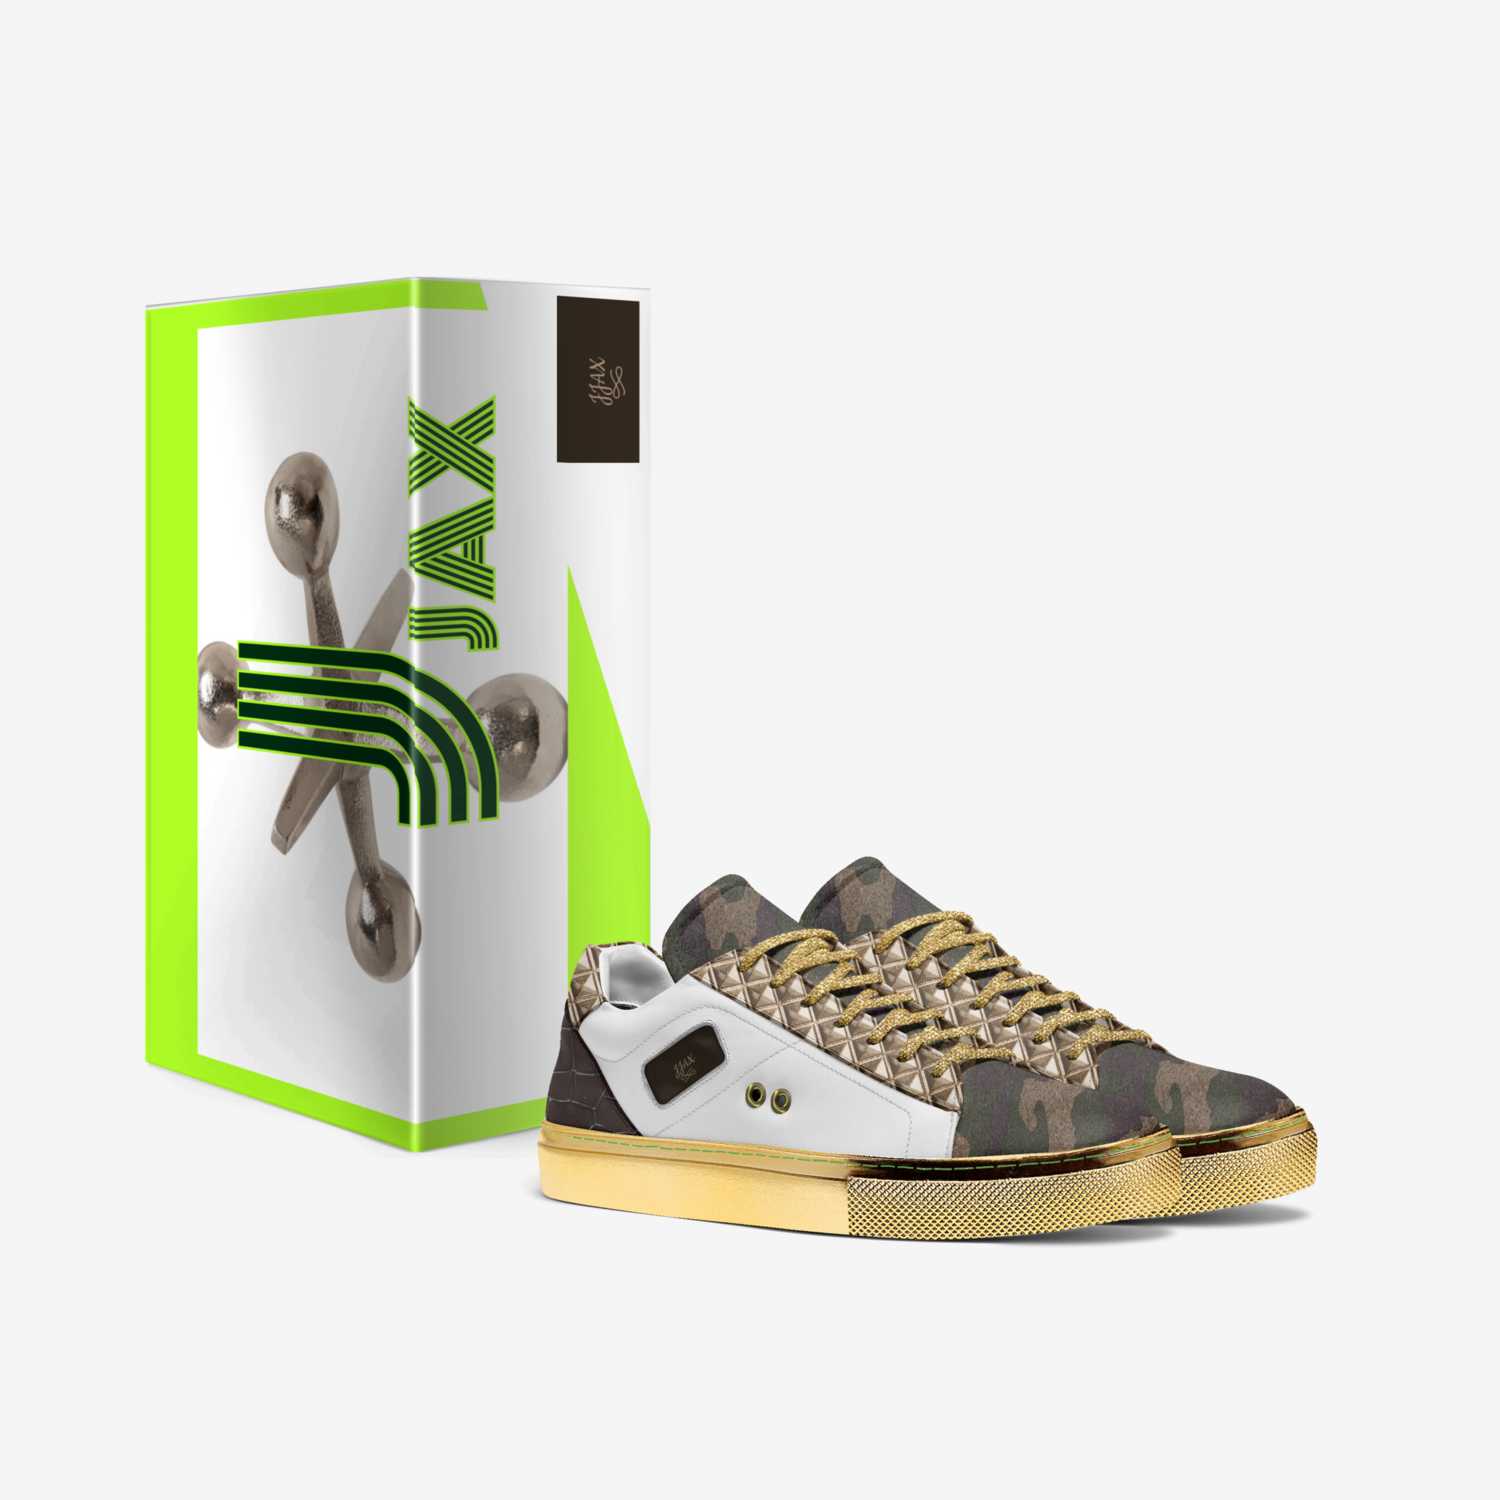 JJAX custom made in Italy shoes by Makayla Morgan | Box view